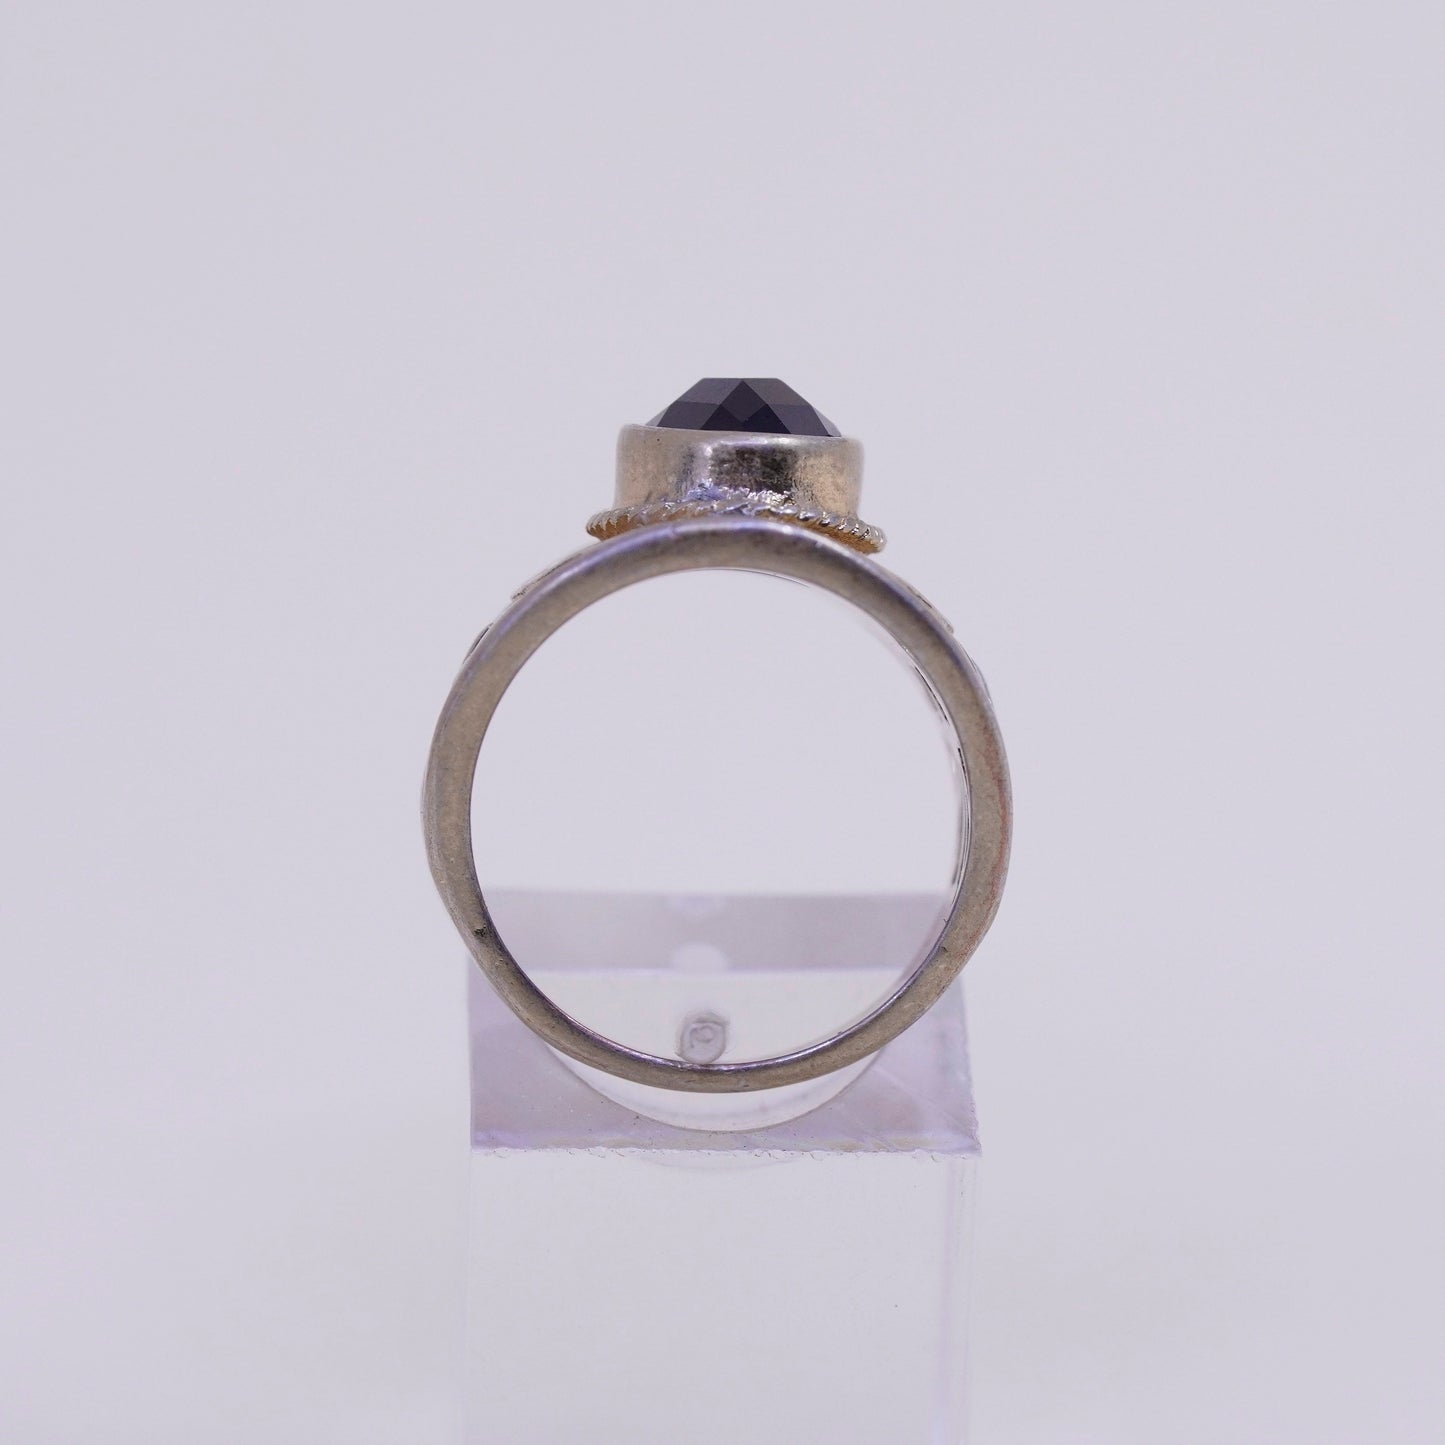 Size 7, vintage modern gold tone brass ring w/ black stone